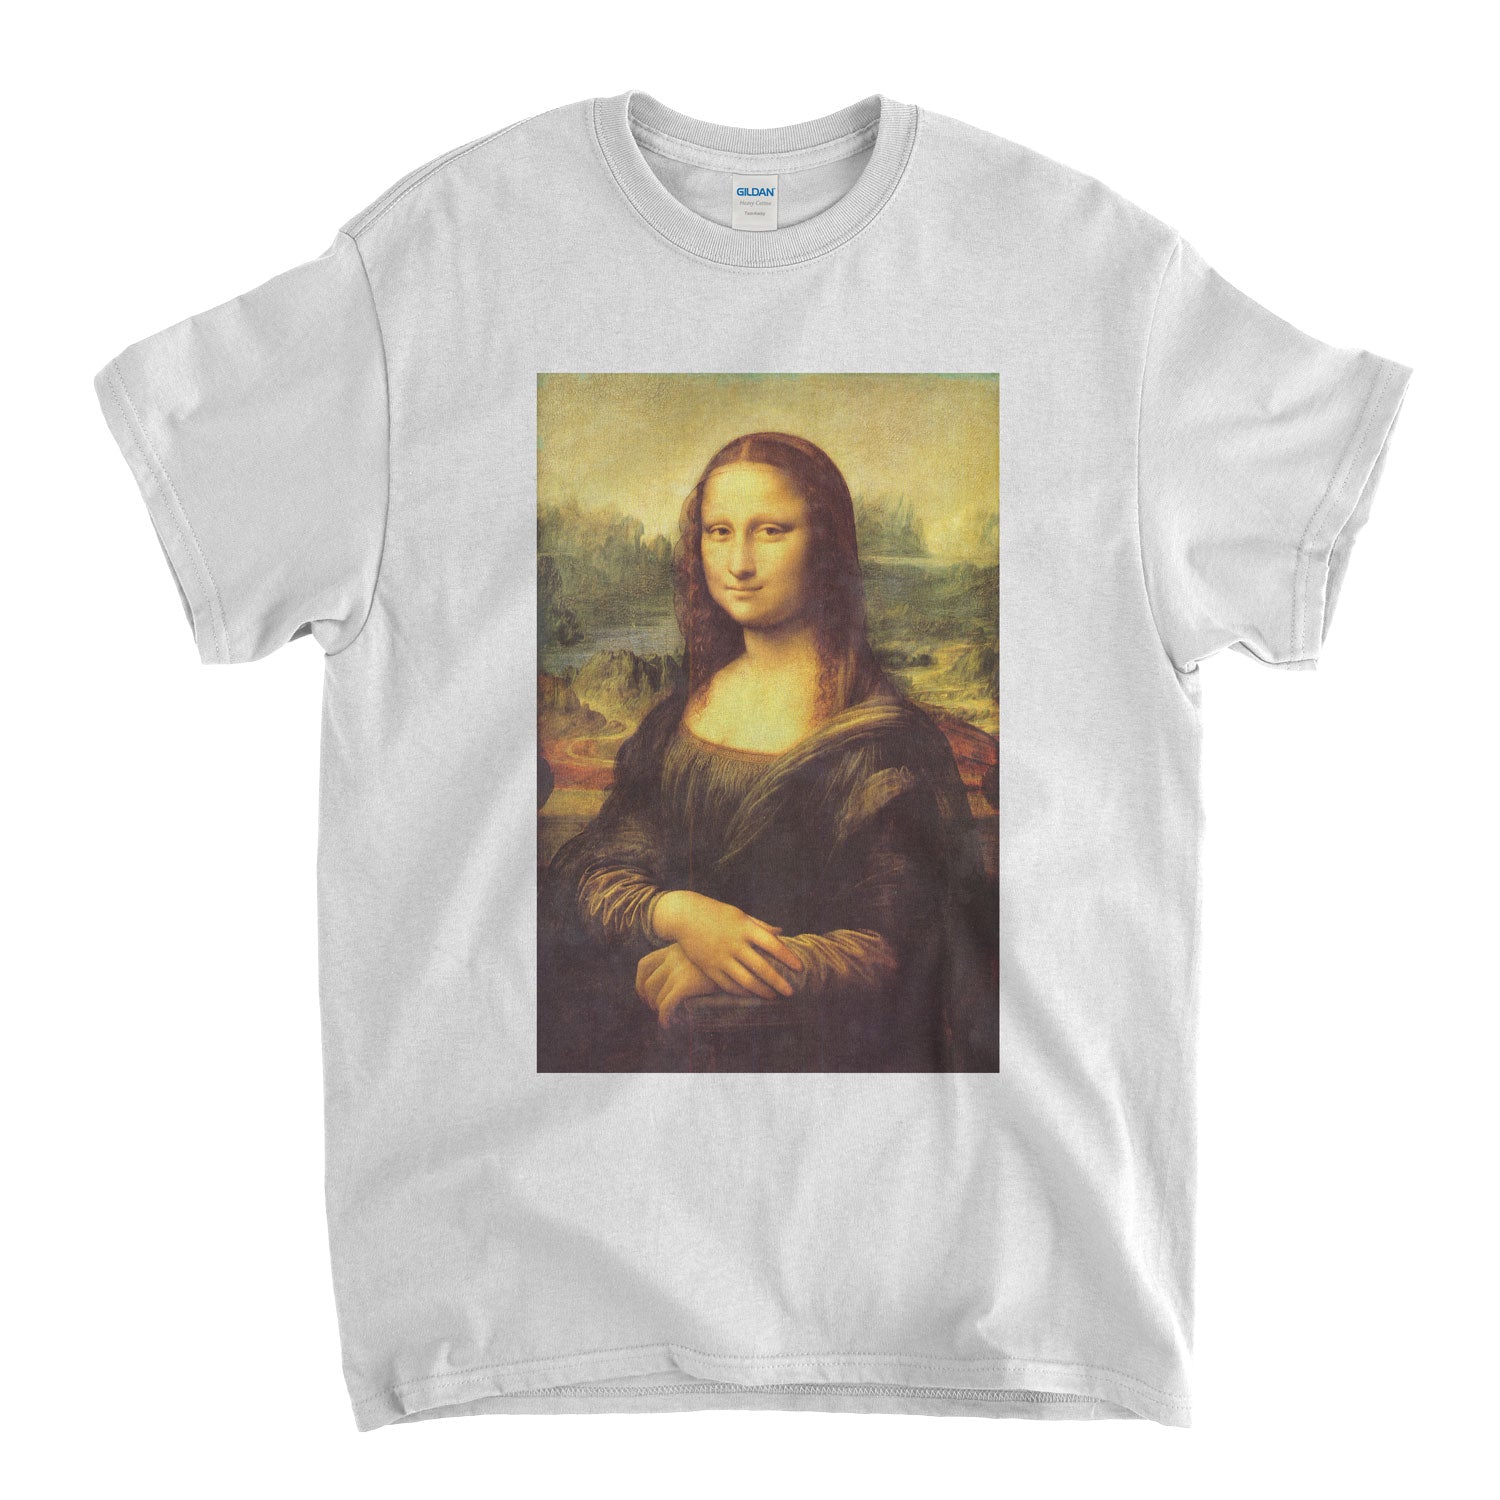 Leonardo da Vinci T Shirt - Mona Lisa An Old Skool Hooligans Classic Art Print